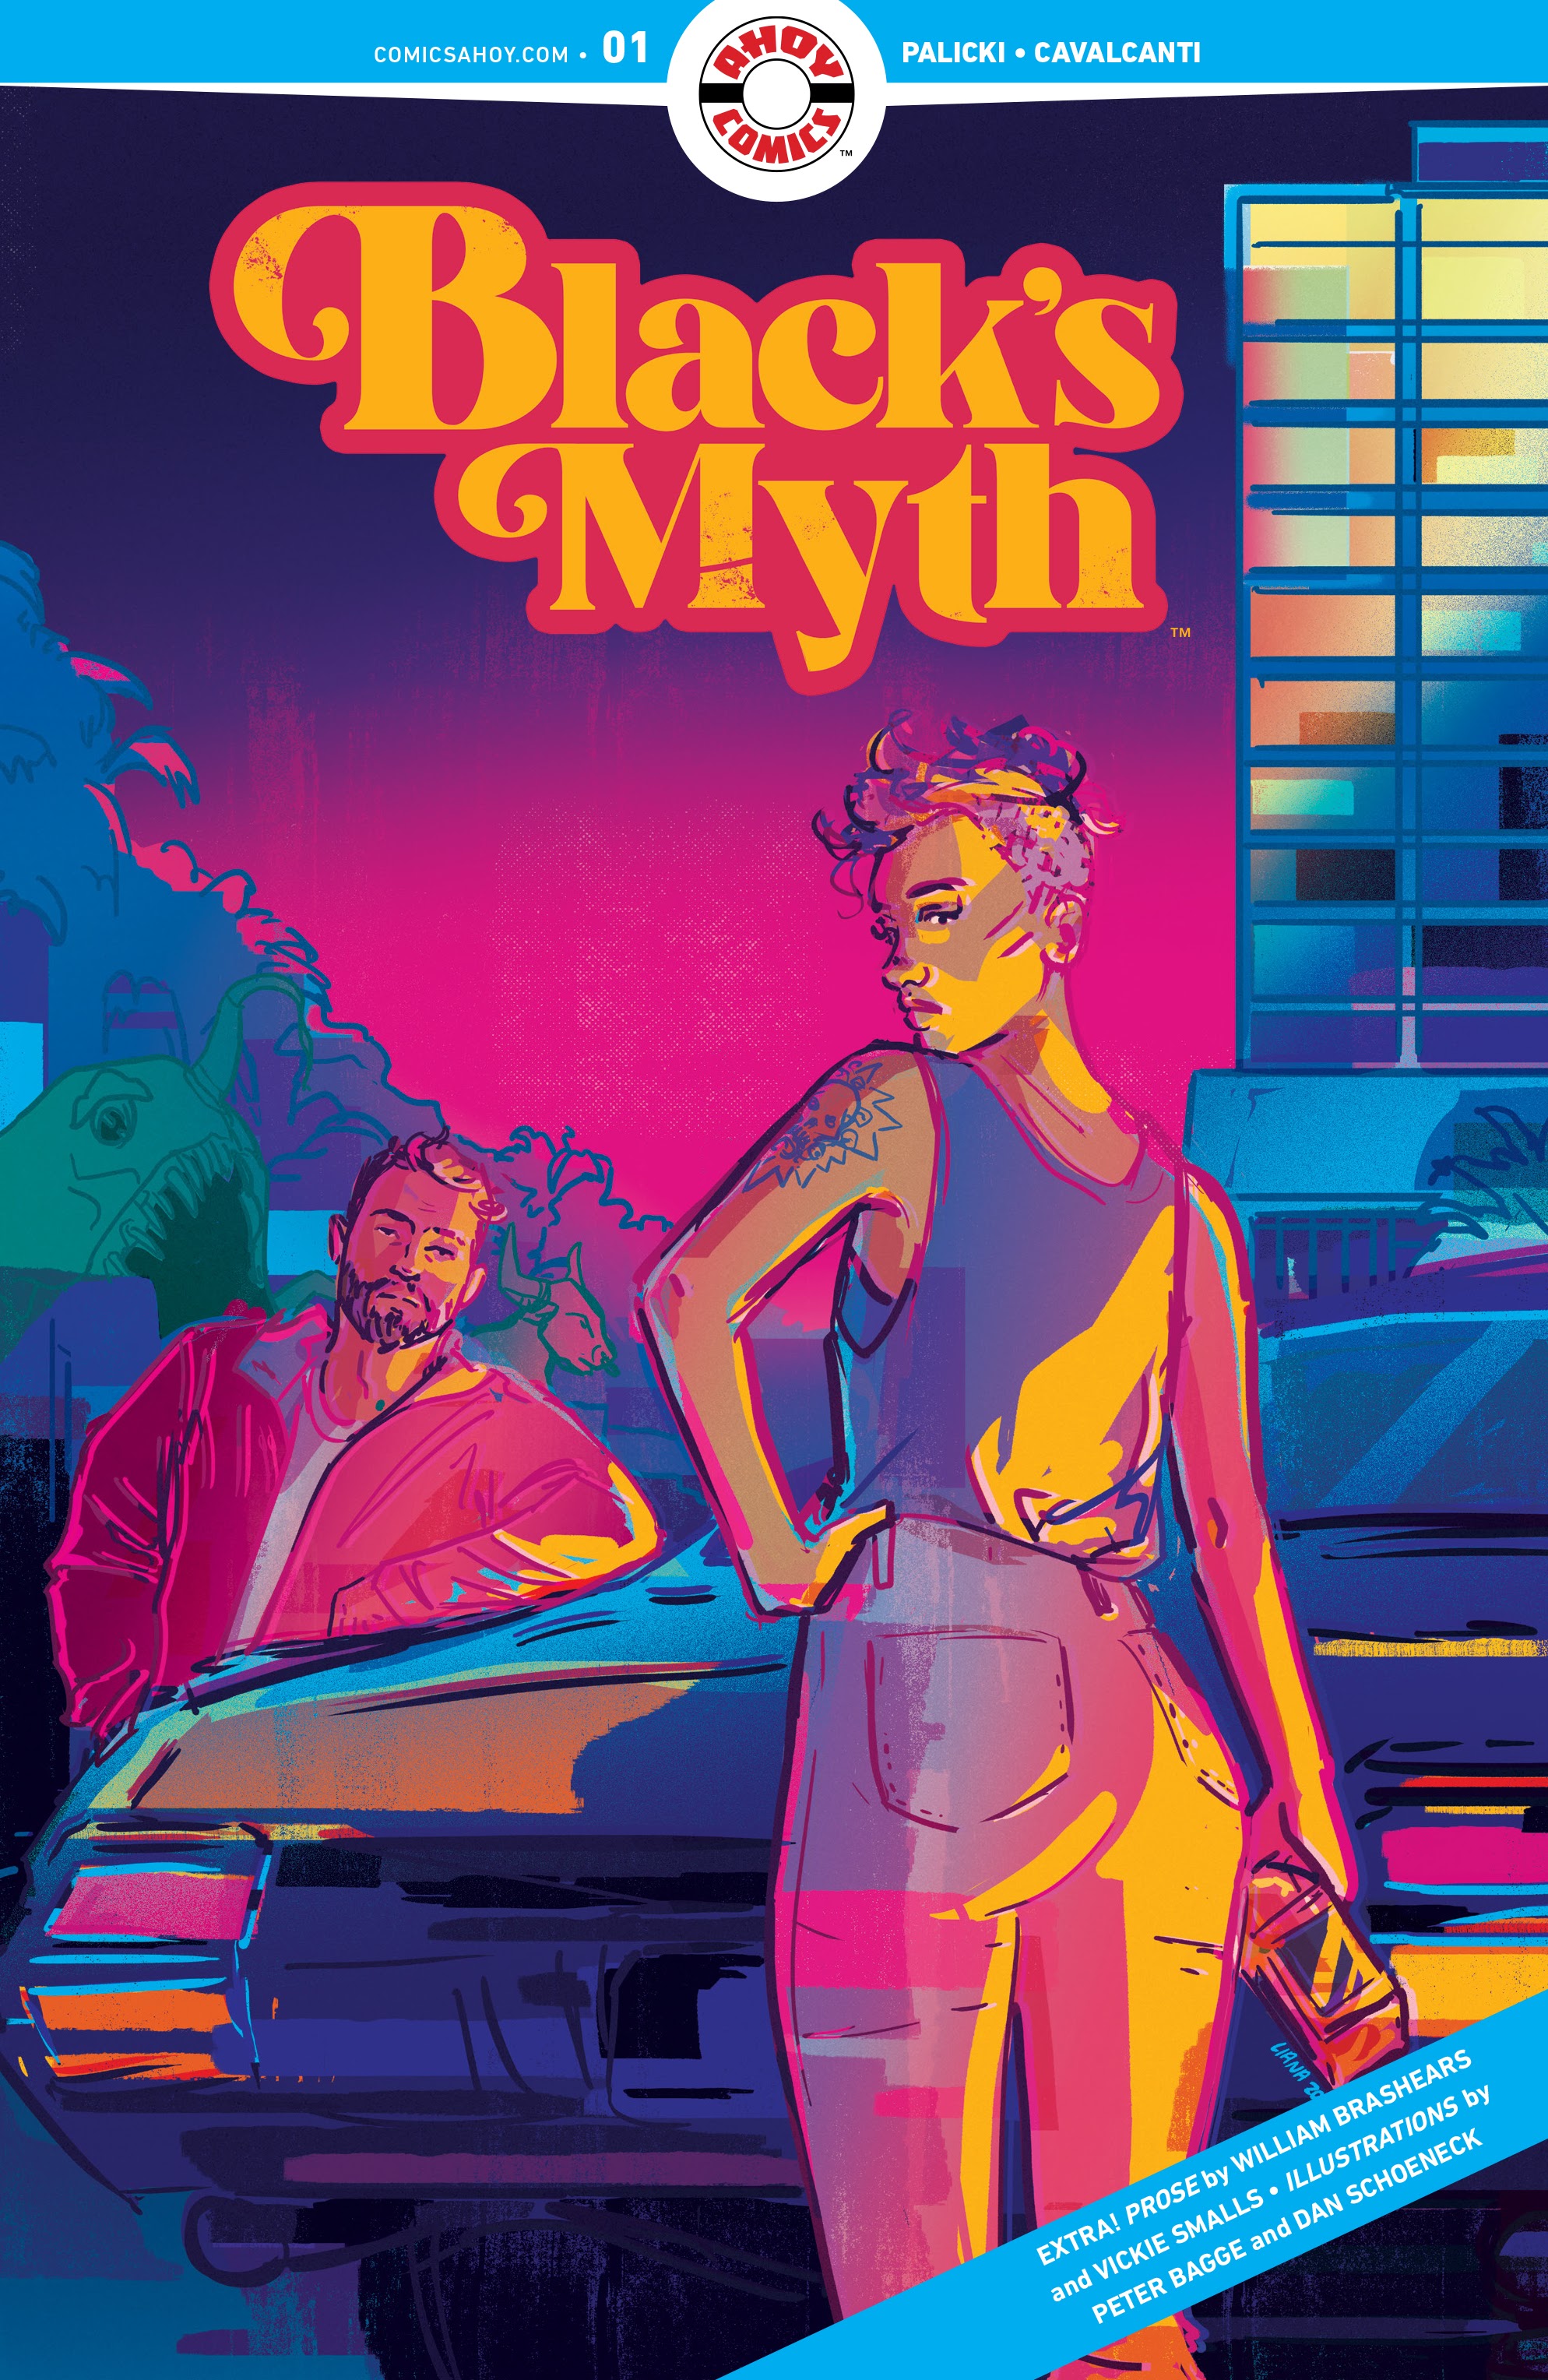 Read online Black's Myth comic -  Issue #1 - 1